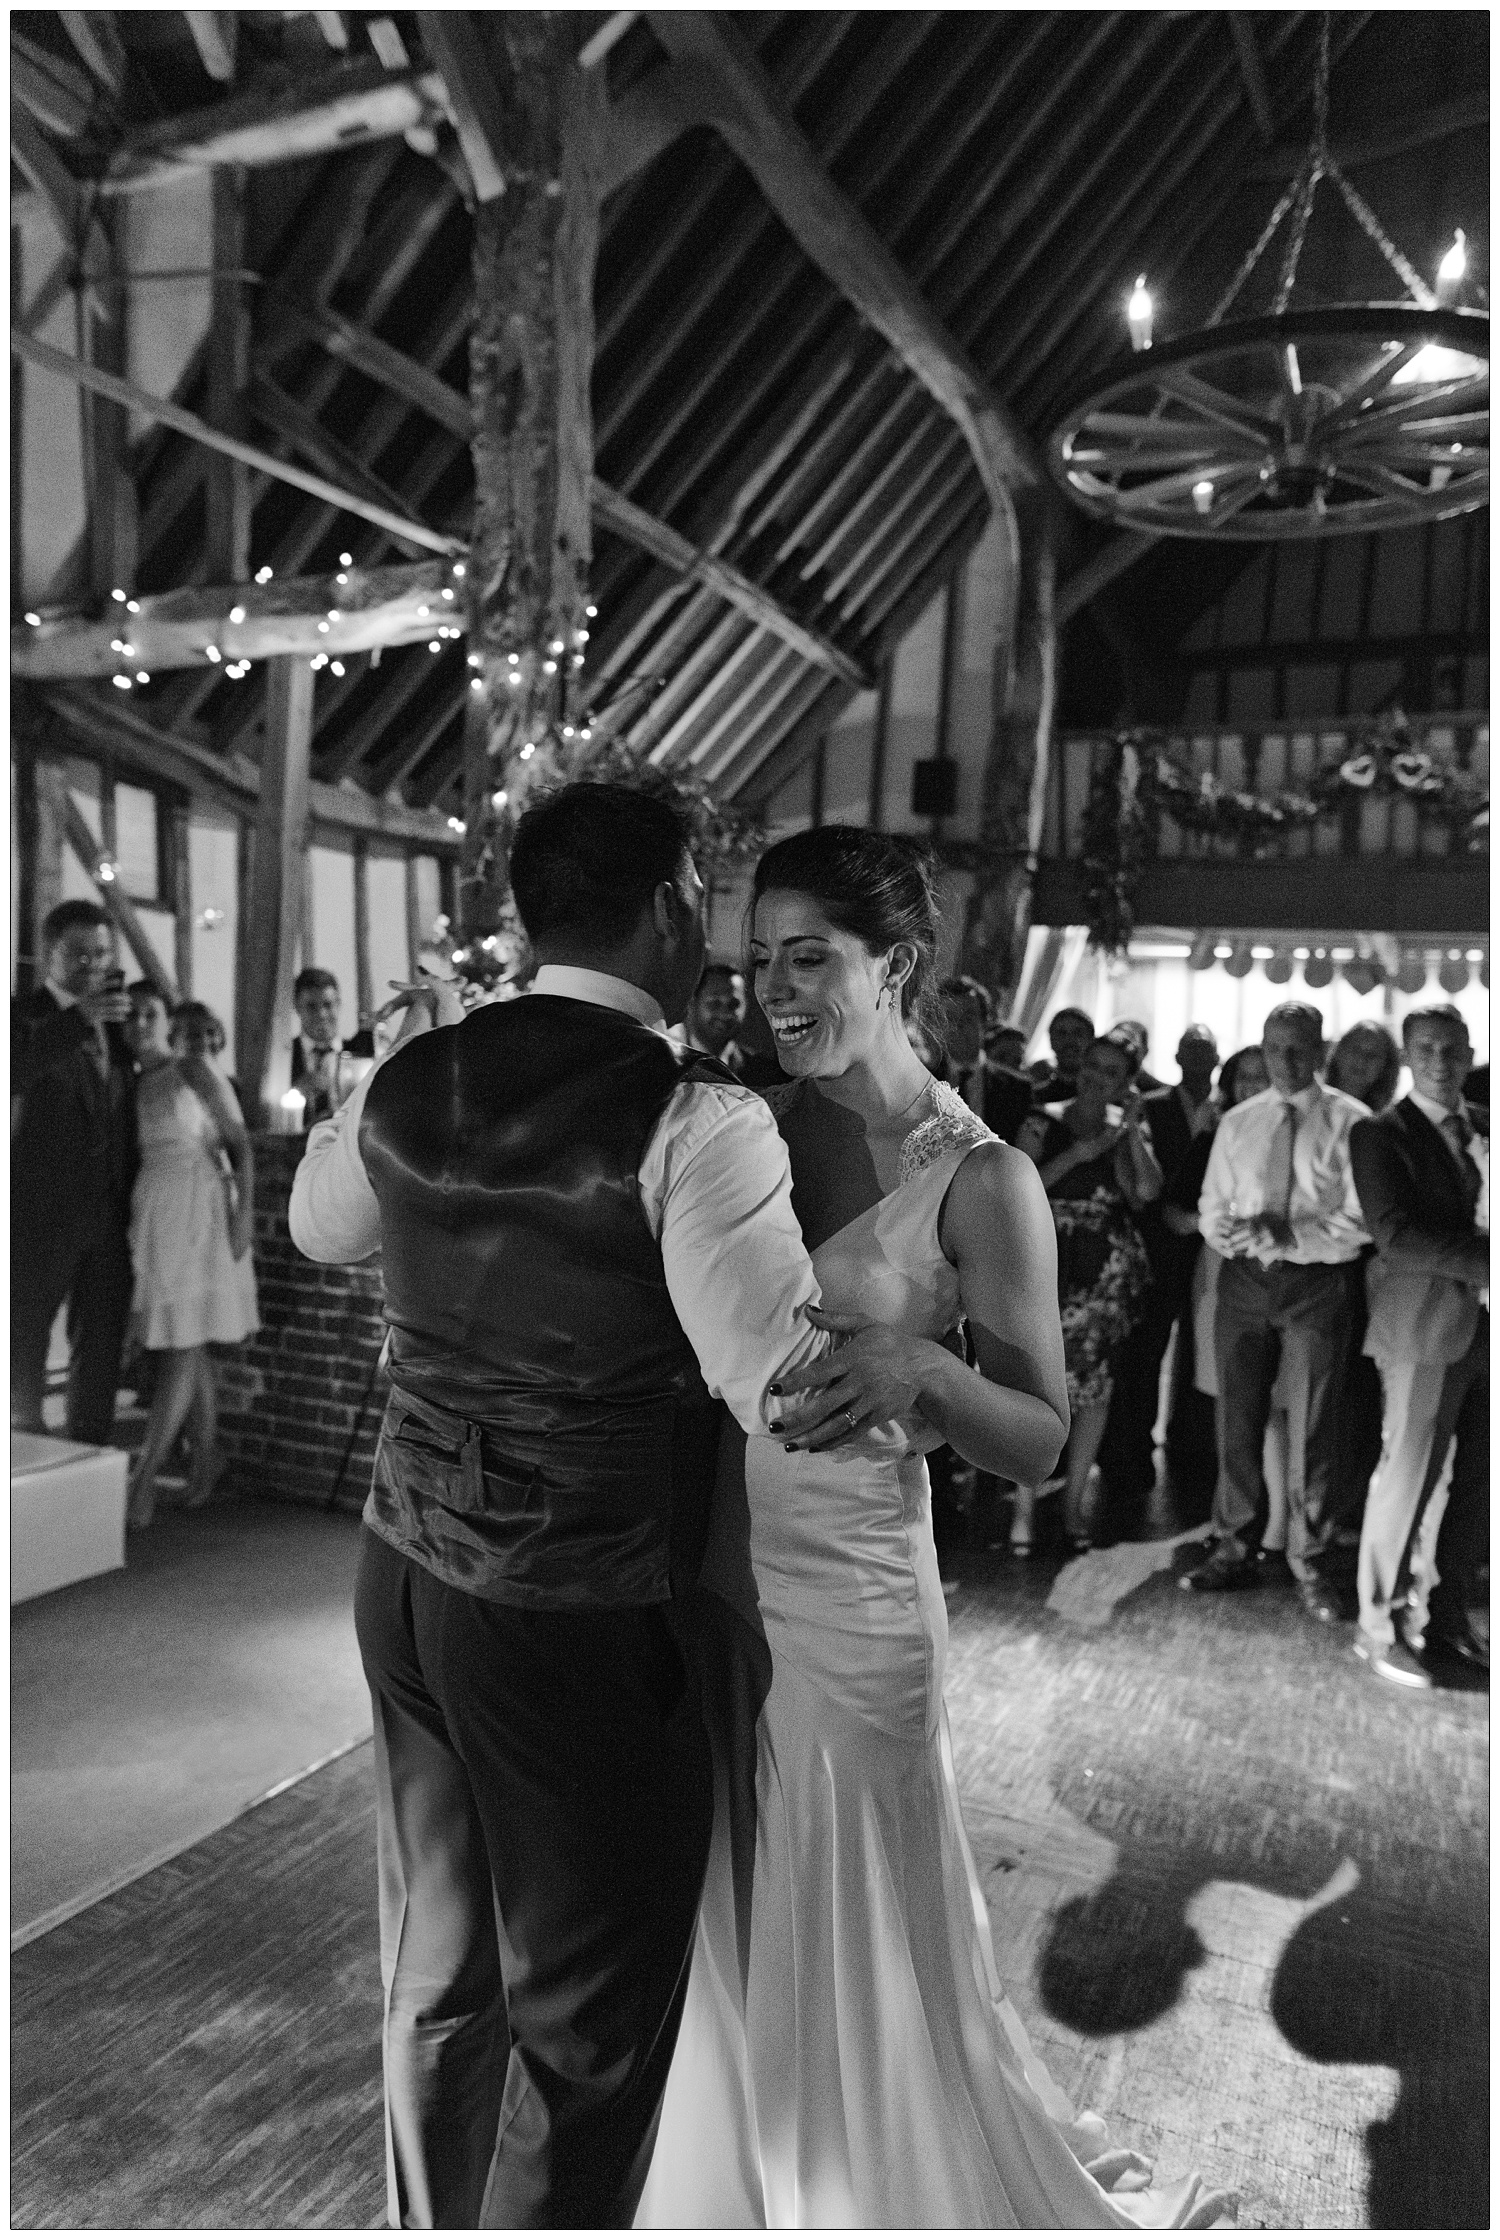 A first dance in an Essex barn.